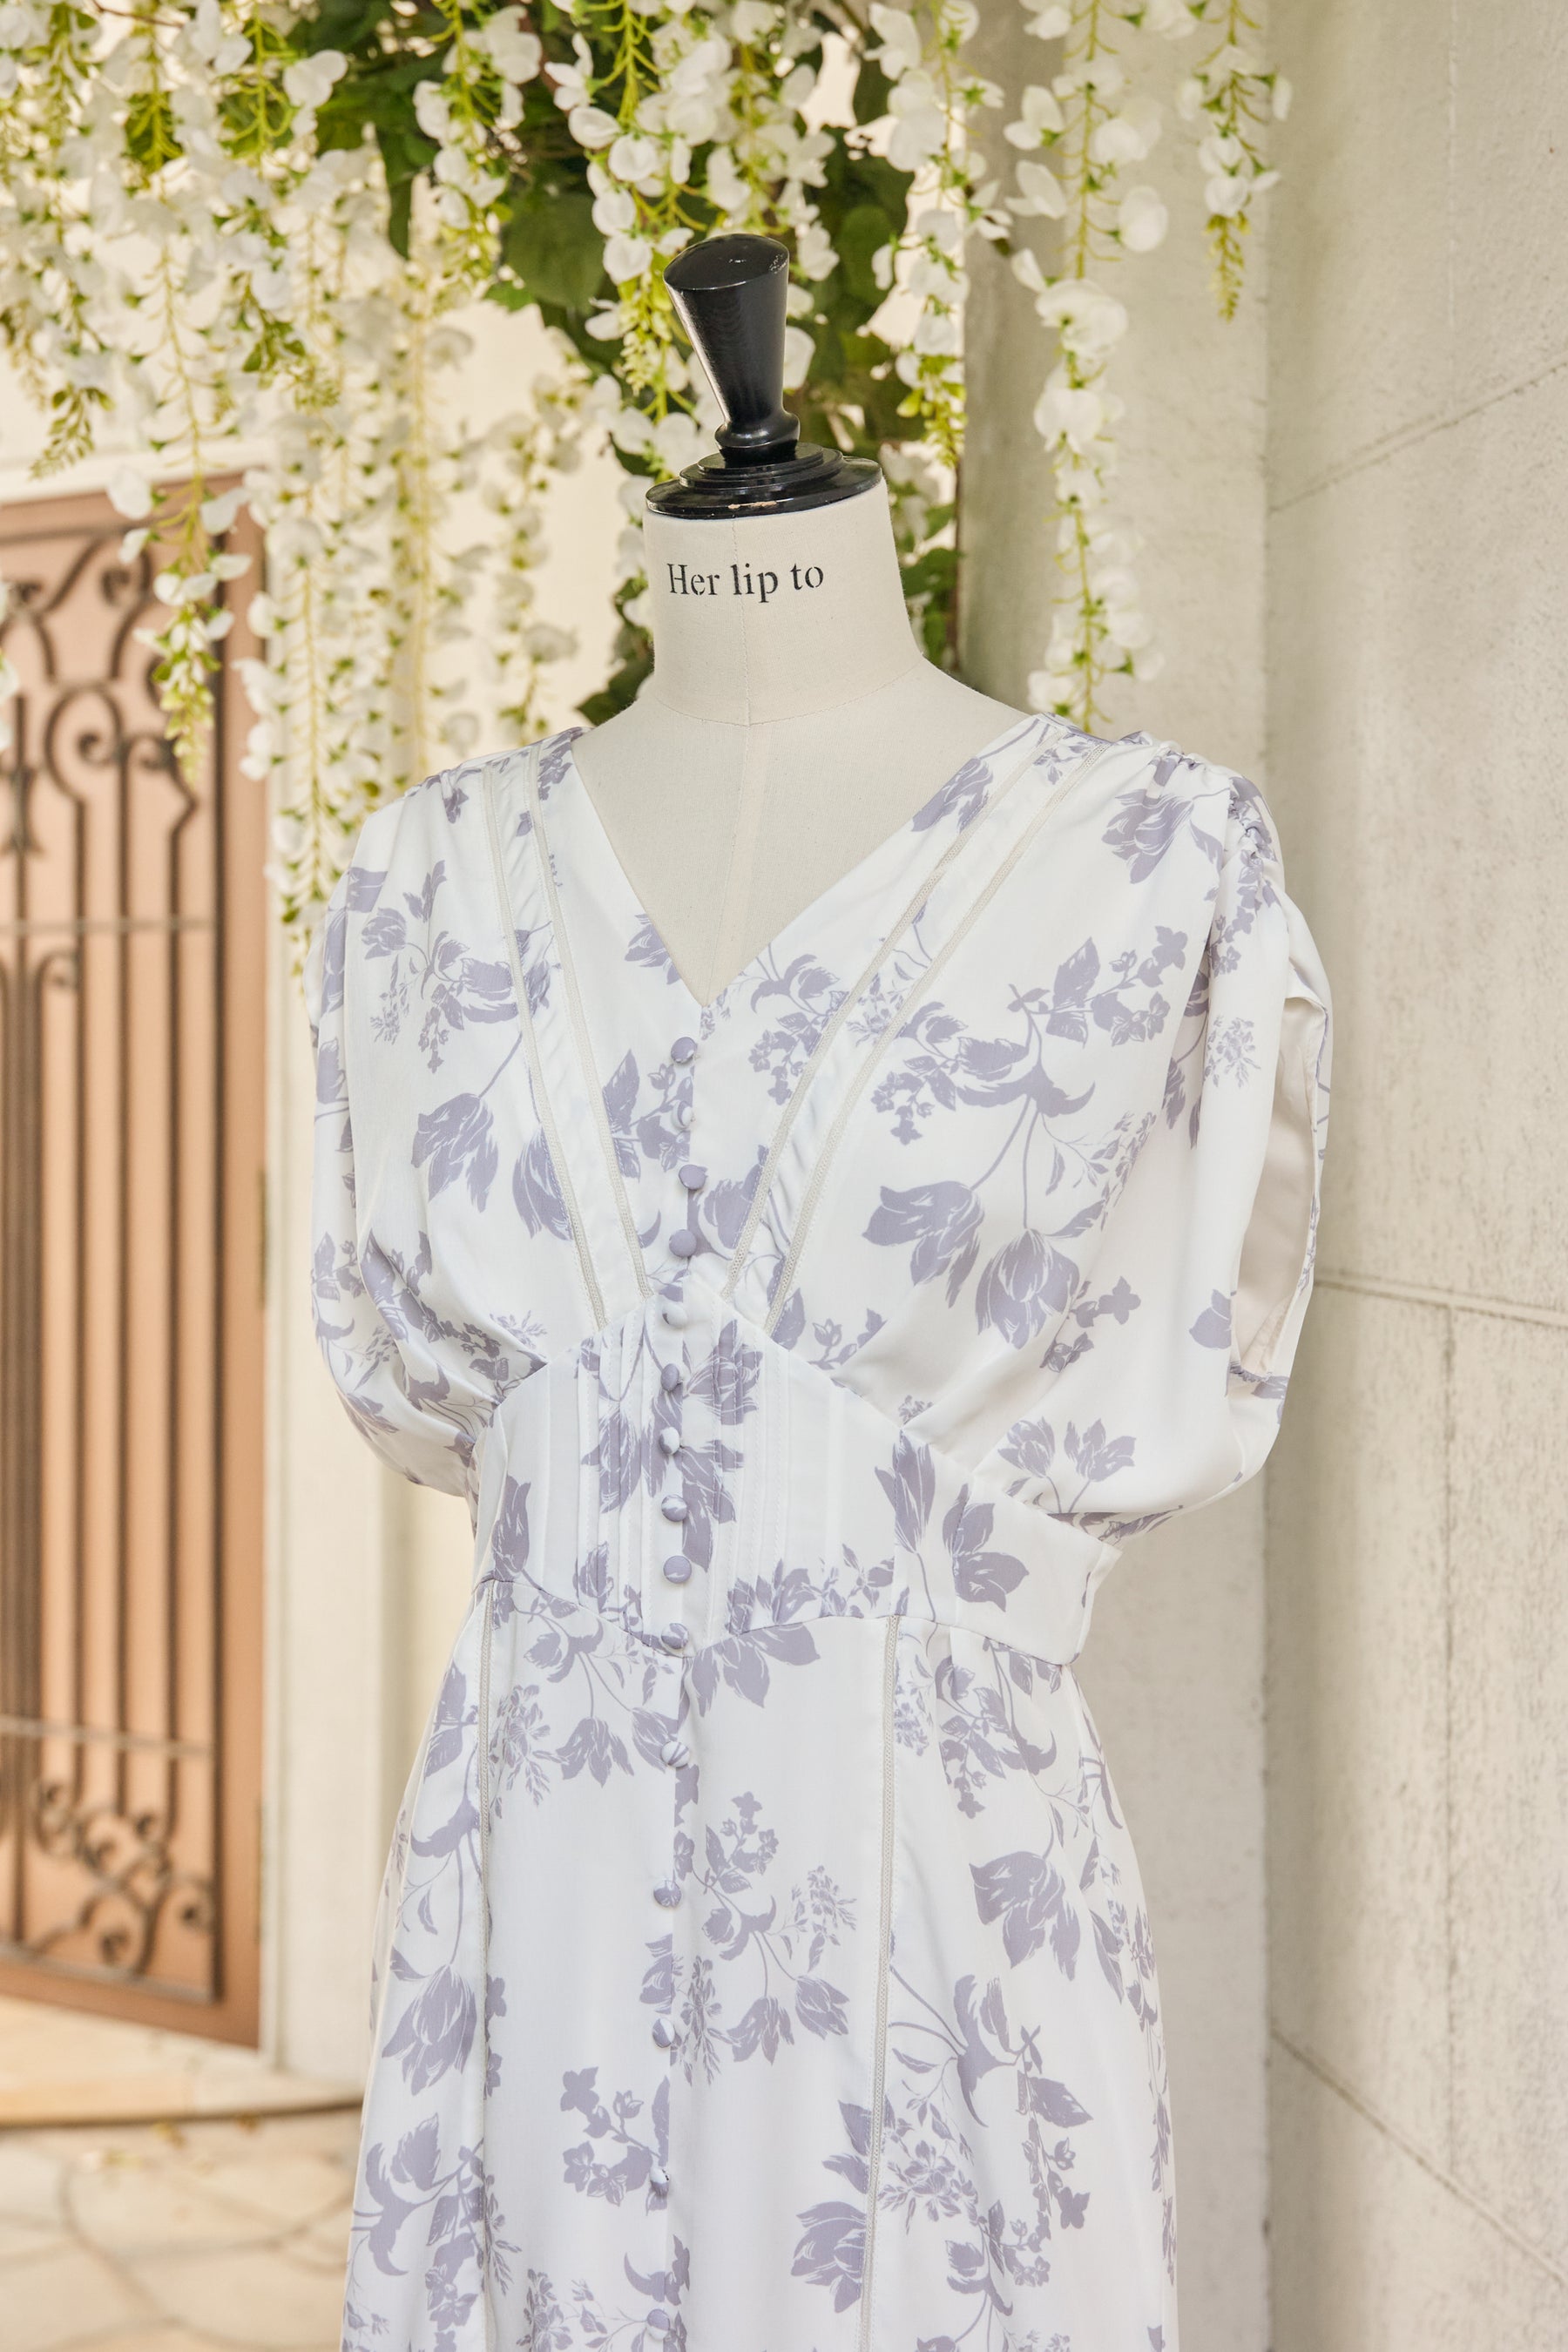 herlipto】Royal Garden Floral Dress - ロングワンピース